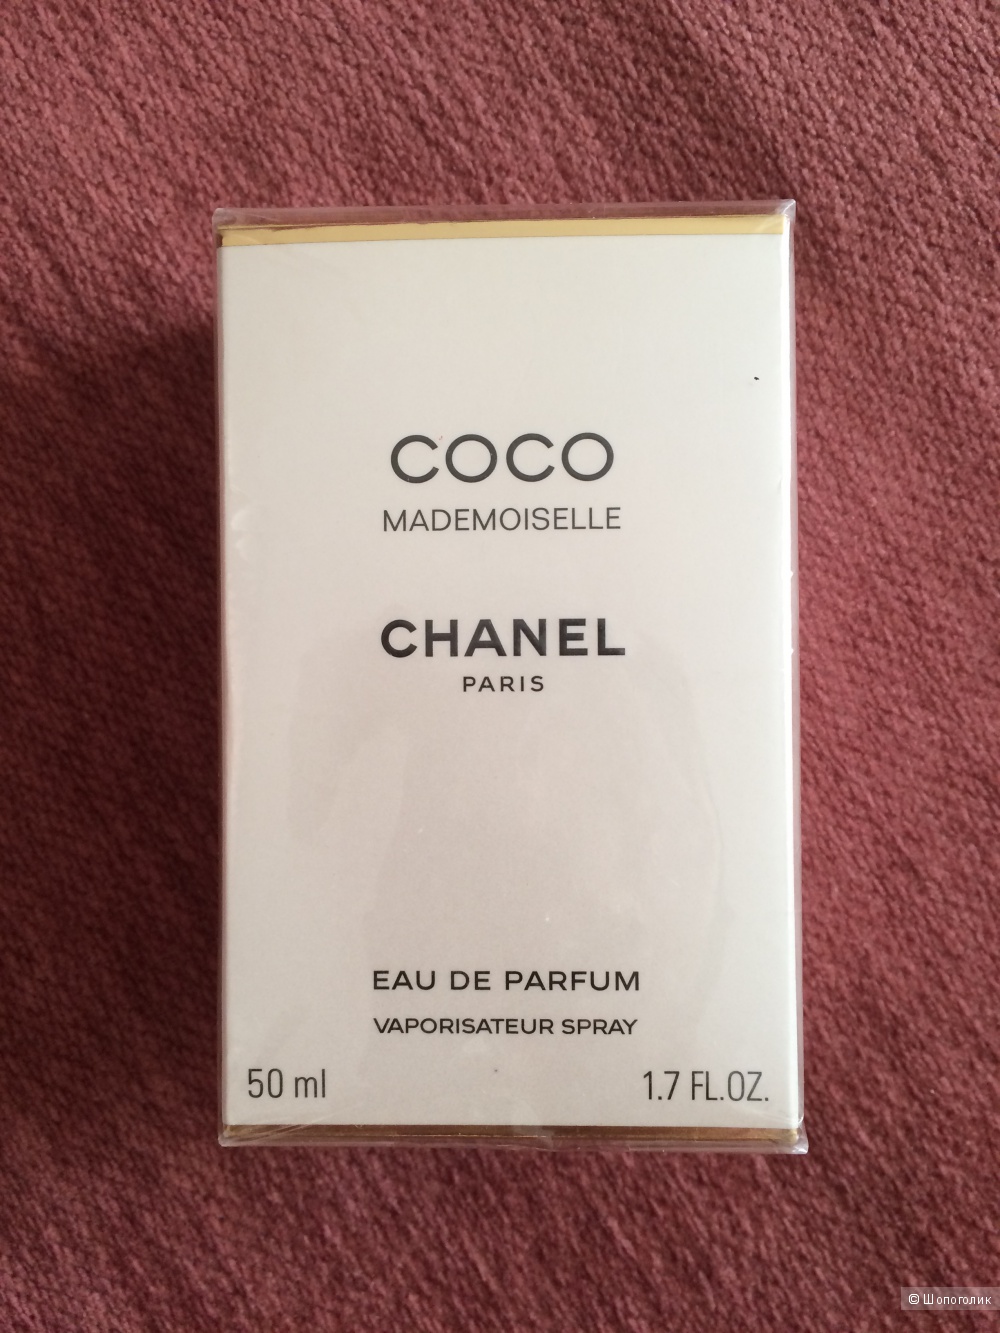 Парфюм Chanel Coco mademoiselle, Paris, 50 мл.